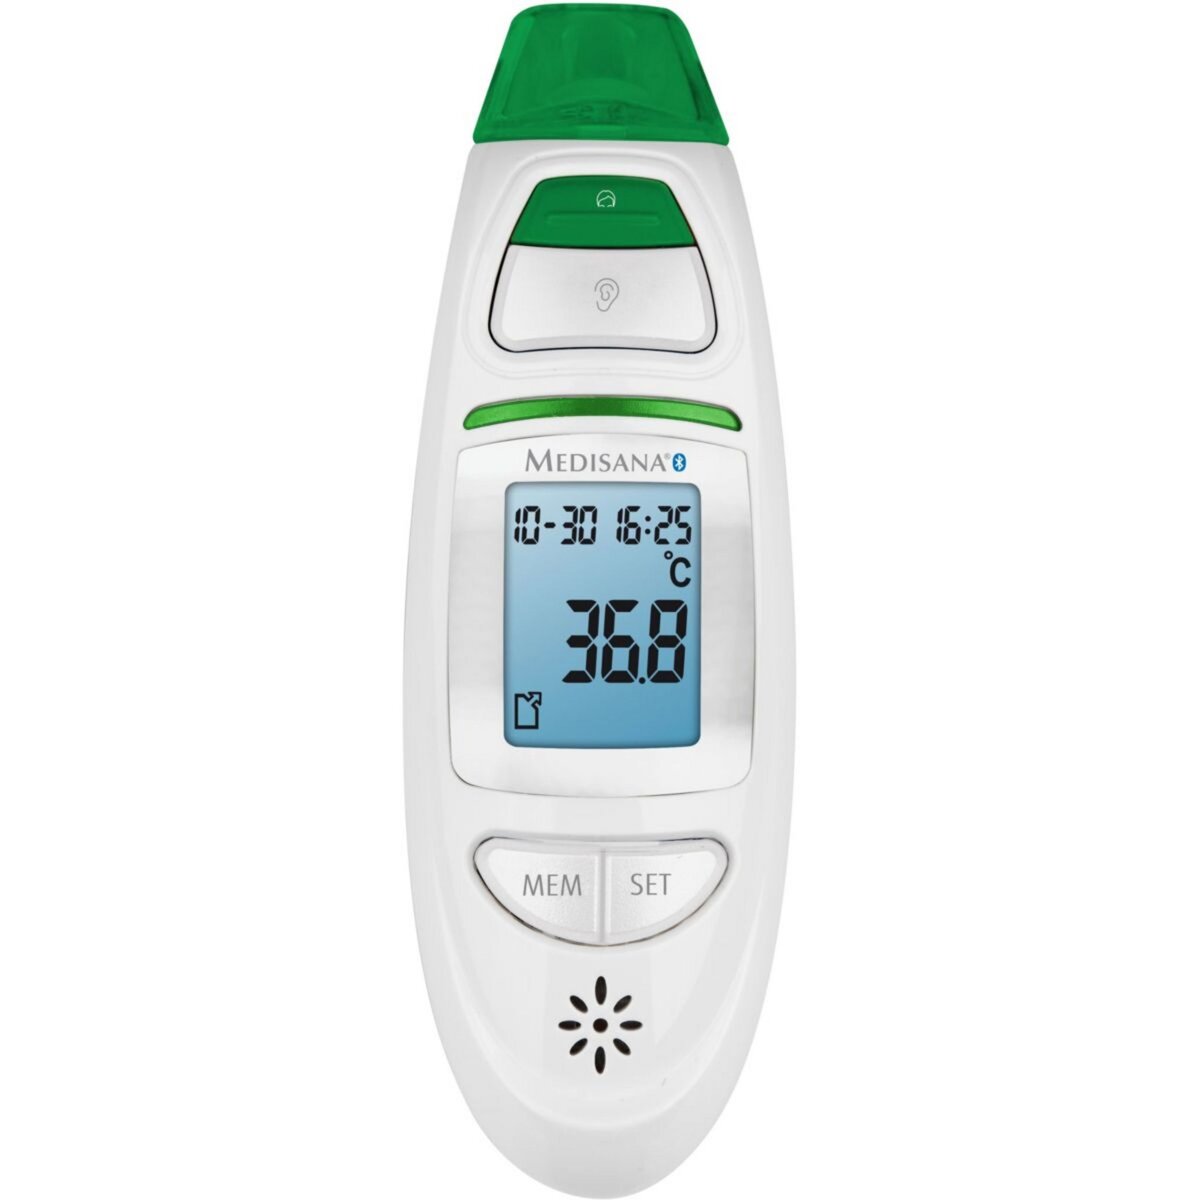 Medisana Thermomètre infrarouge multifonctions connecte TM750